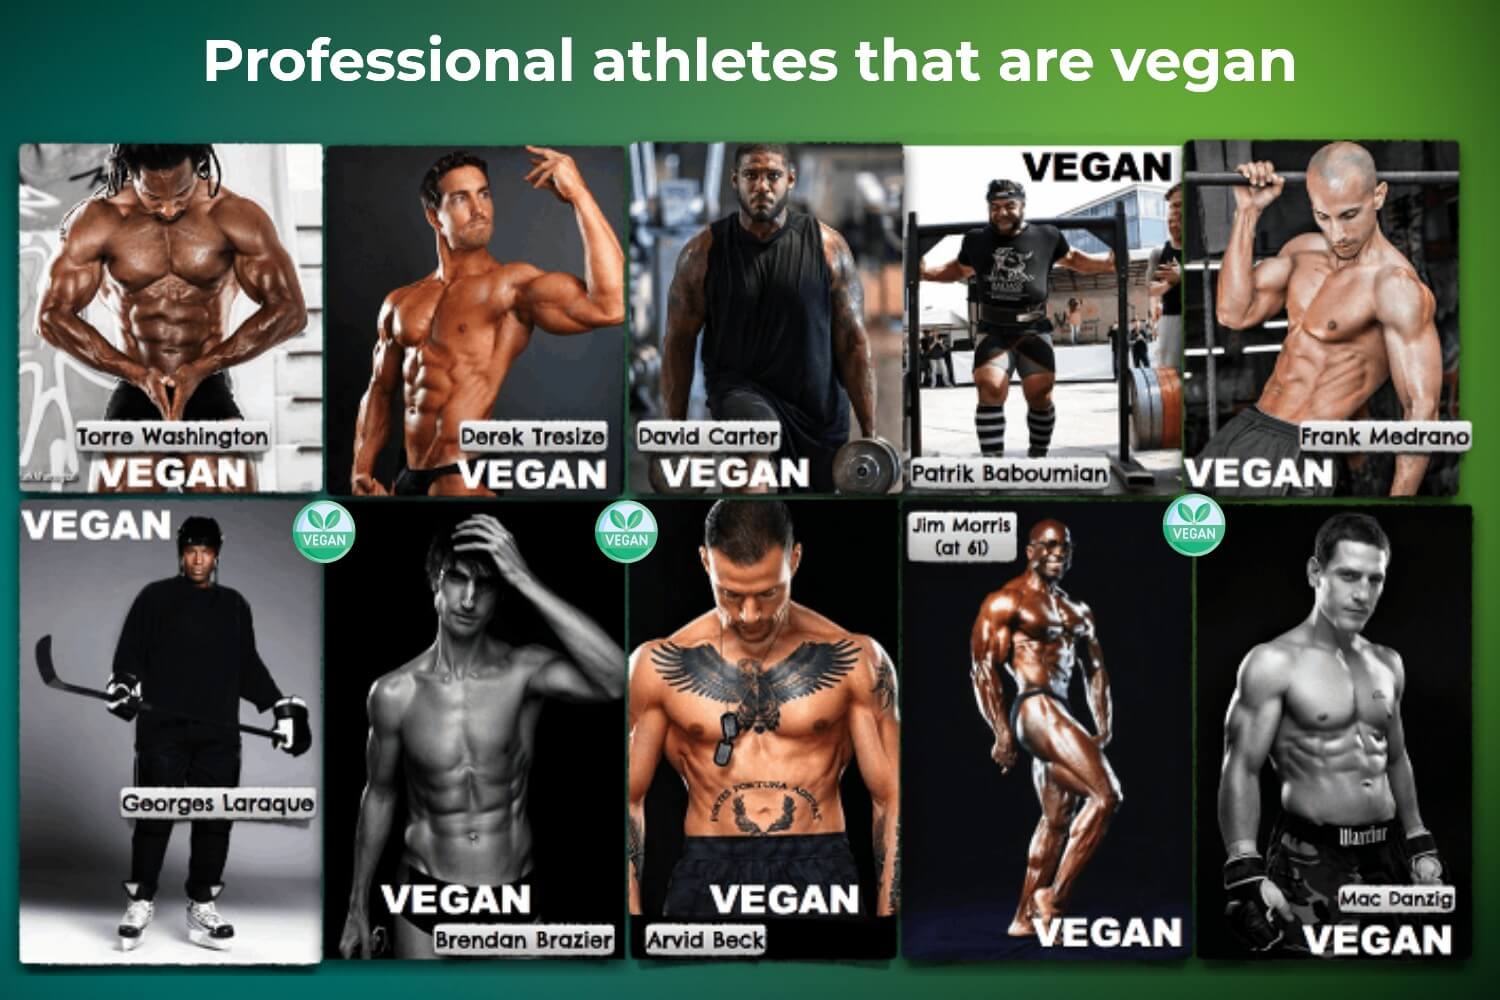 Professional athletes that are vegan